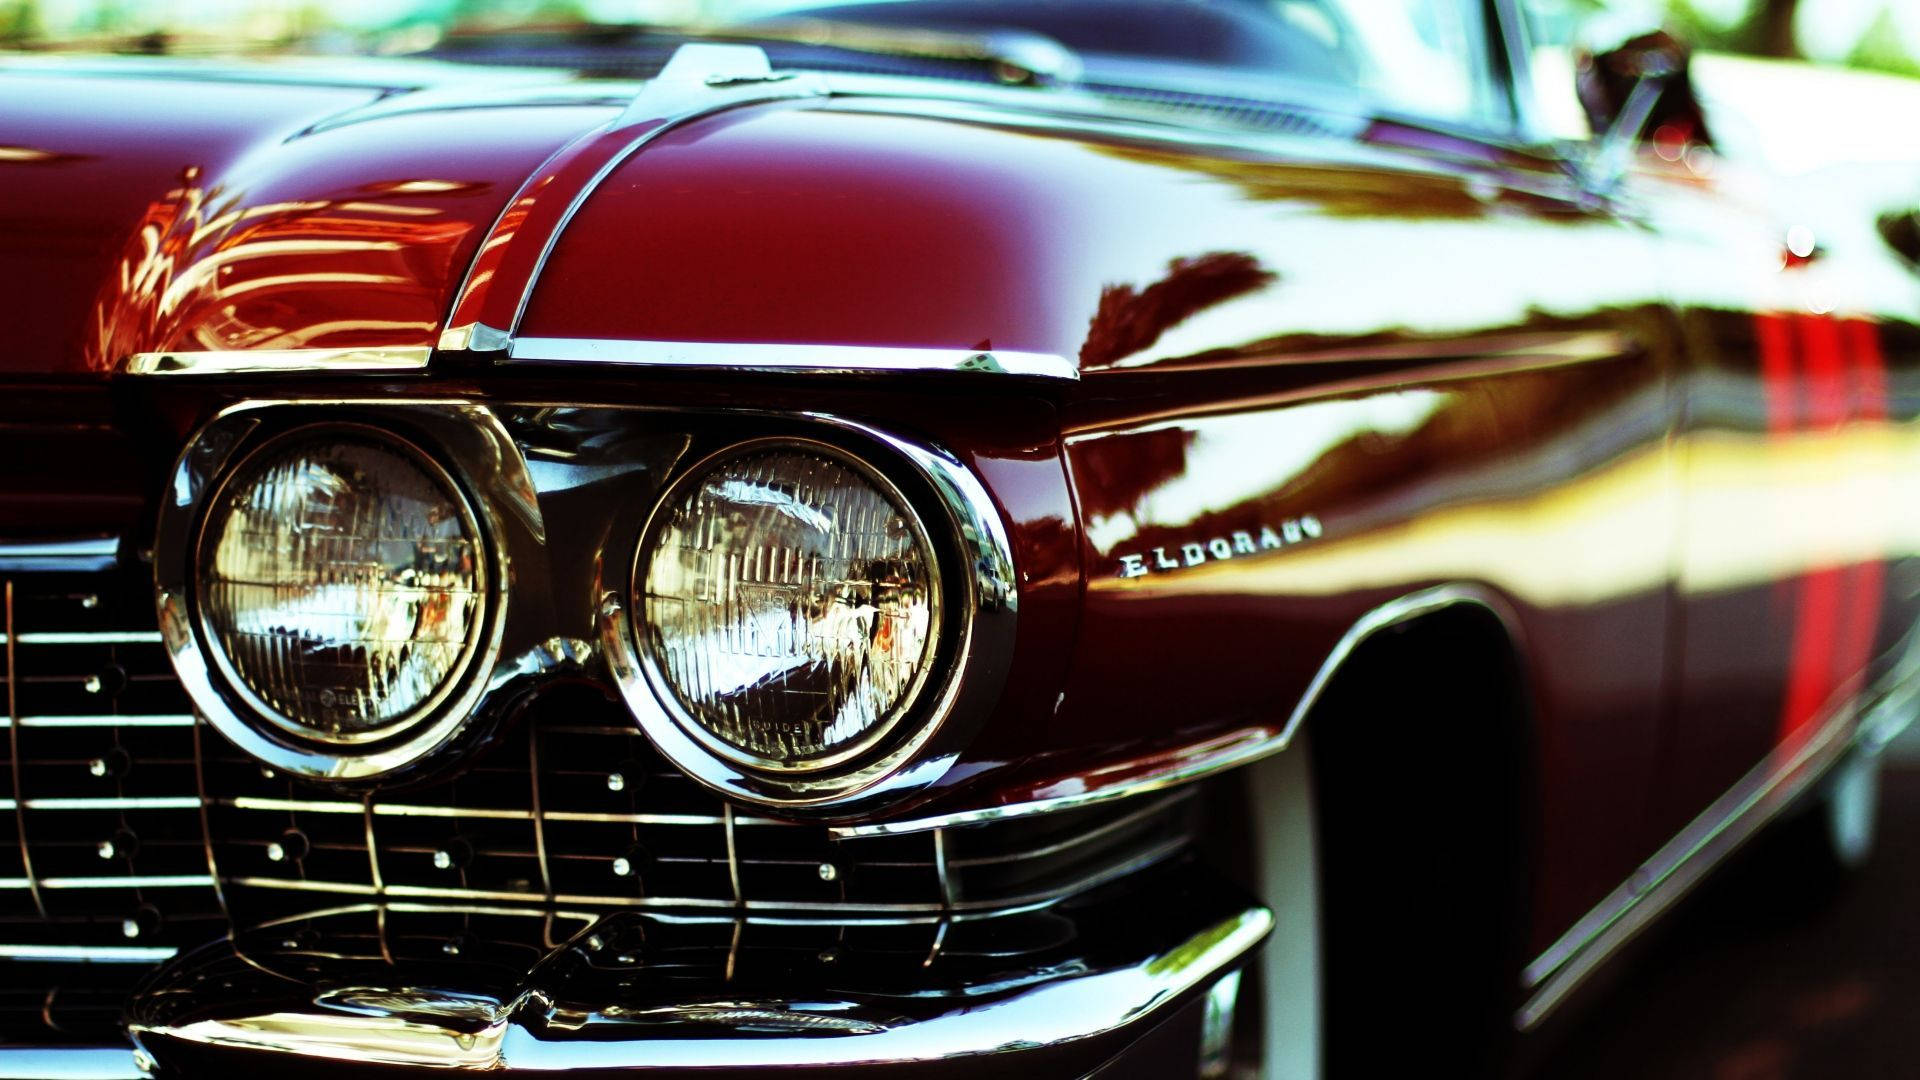 Classic Red Cadillac Eldorado Background